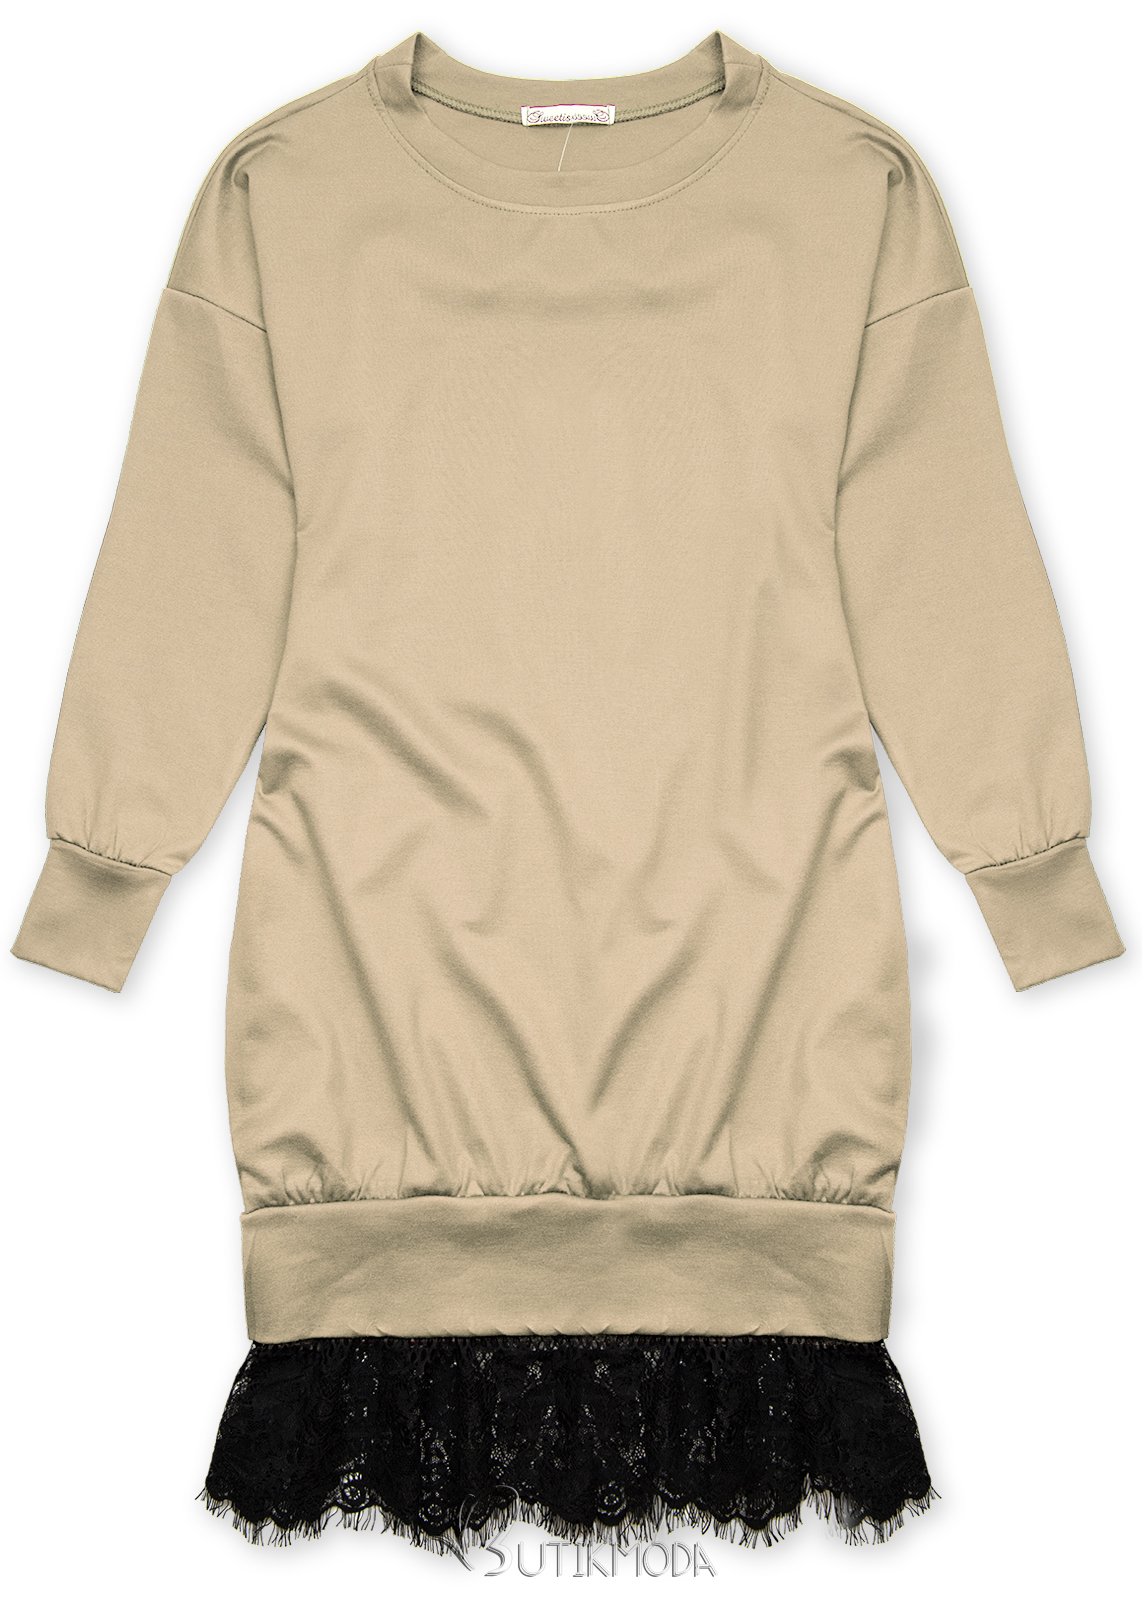 Sweatshirt Dress - Light beige - Ladies